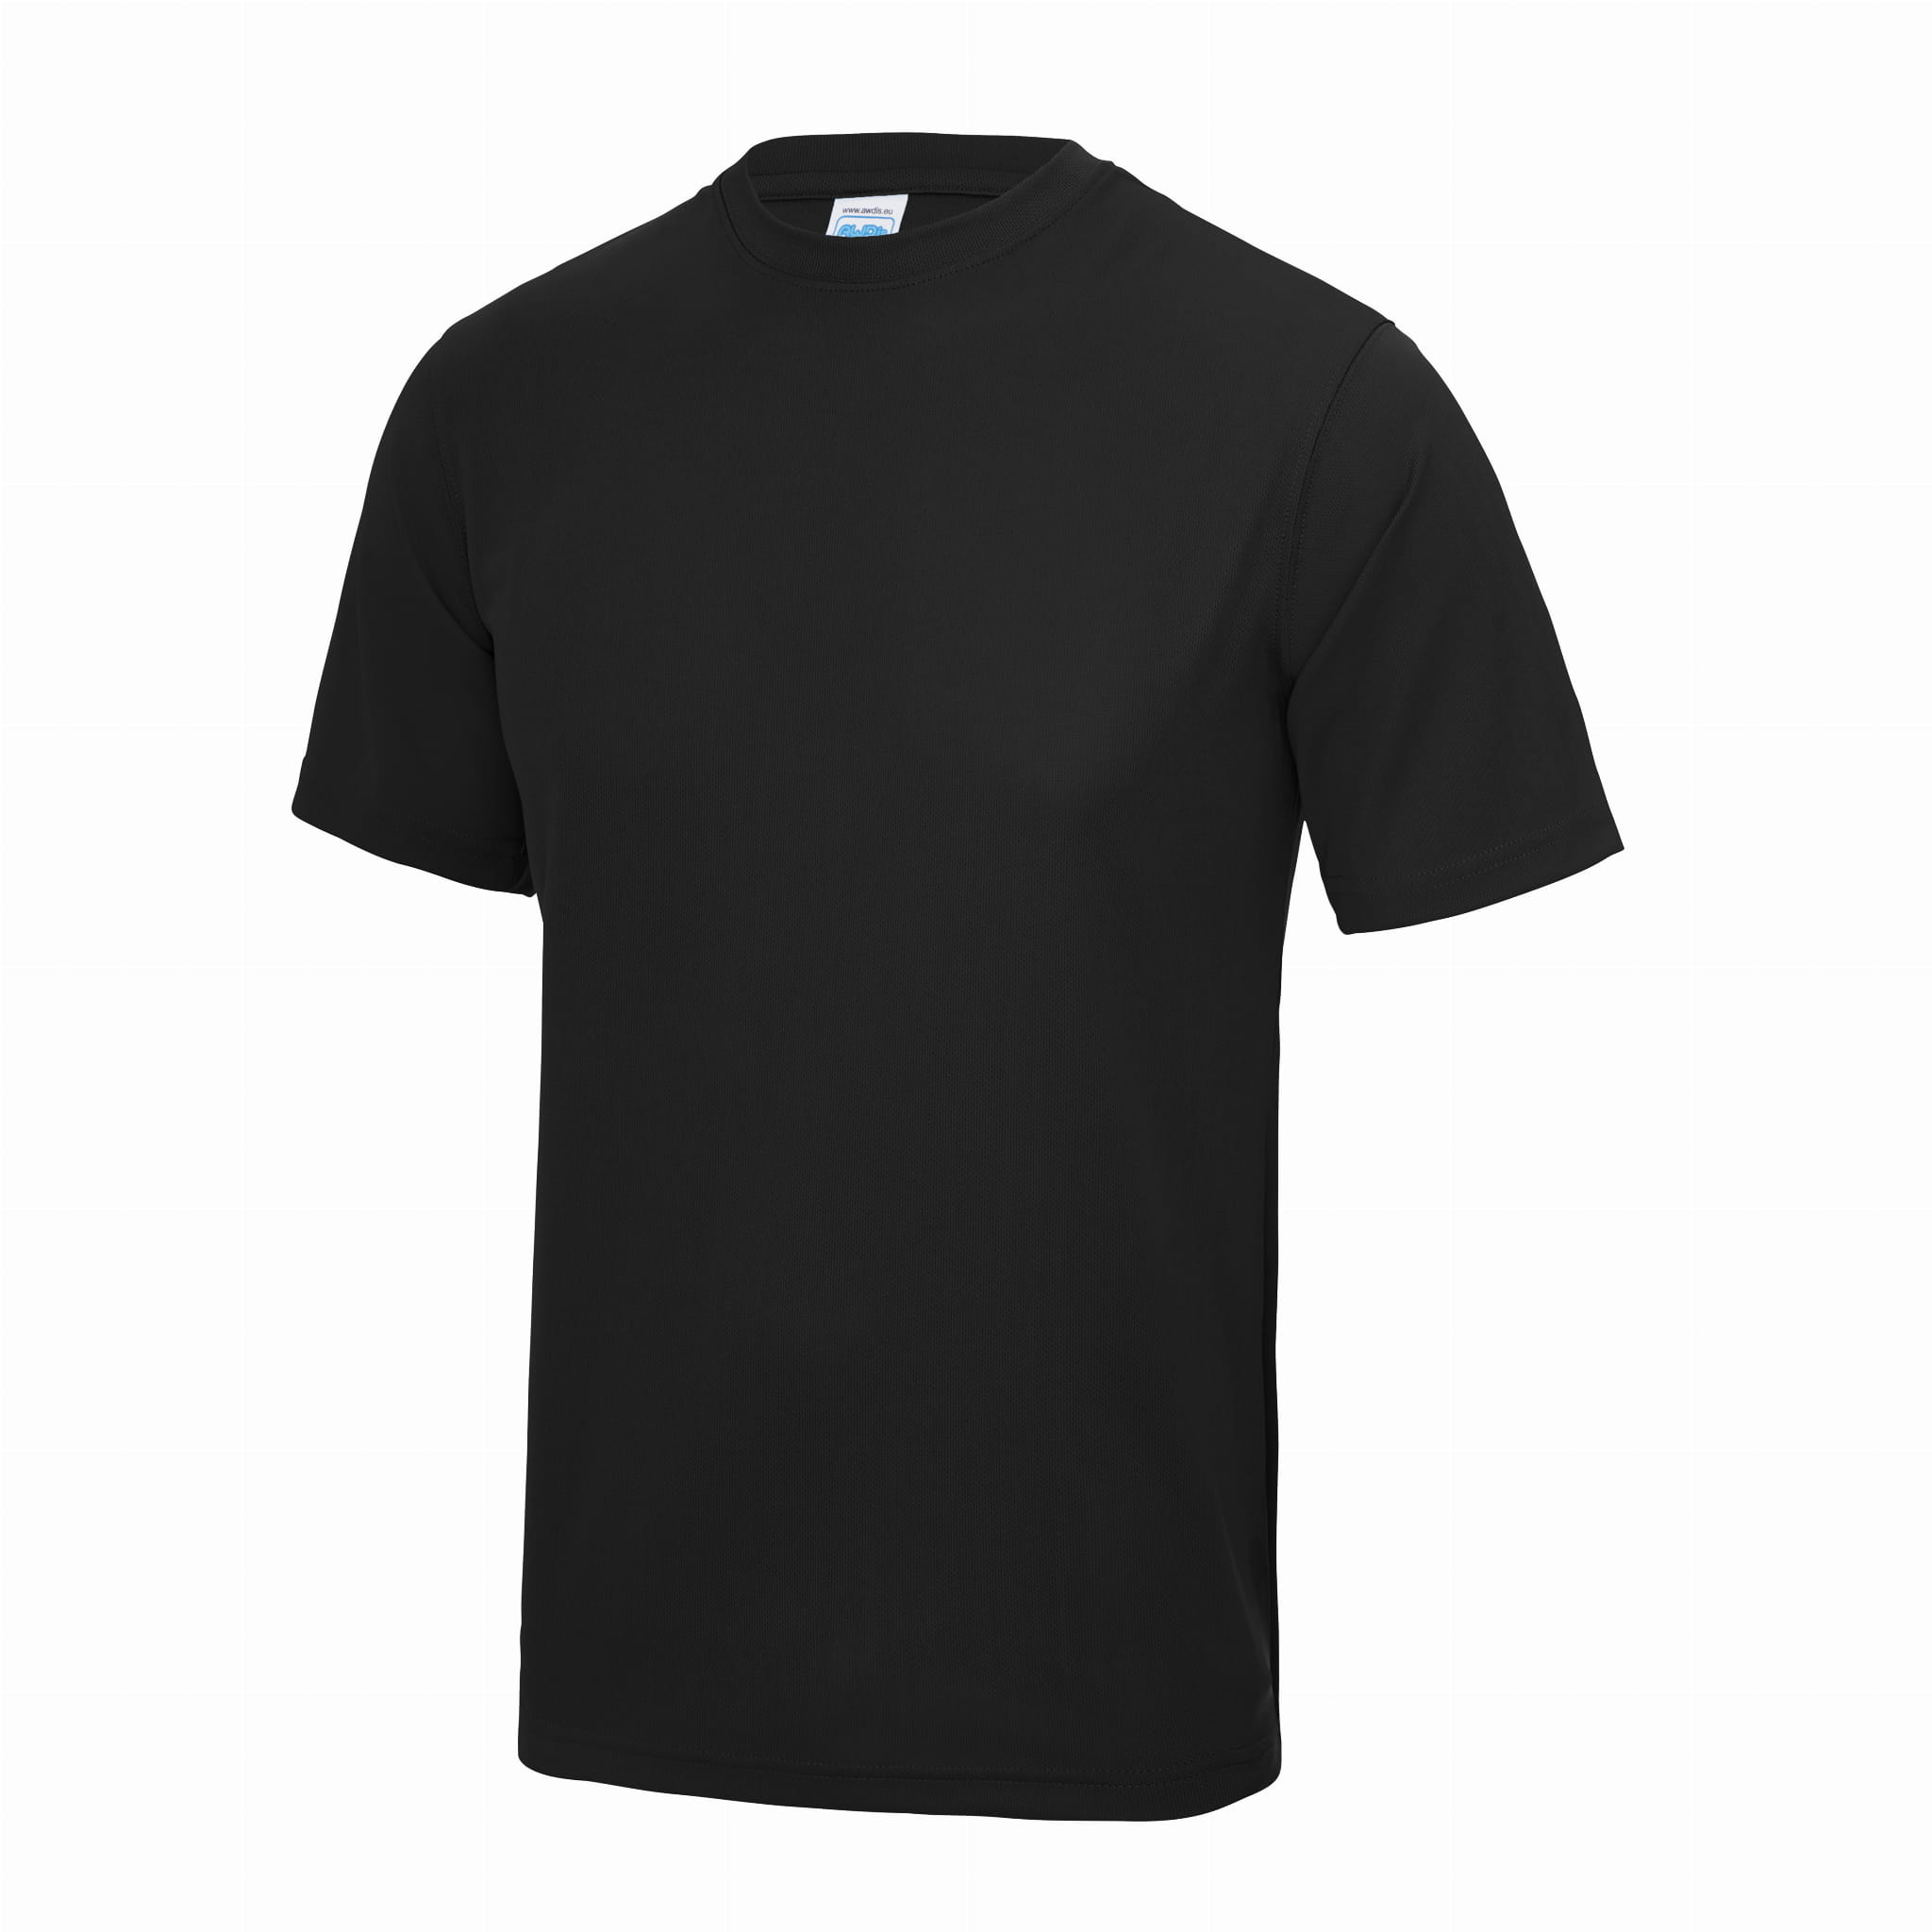 XL Unisex Sports T Shirt - choose logo